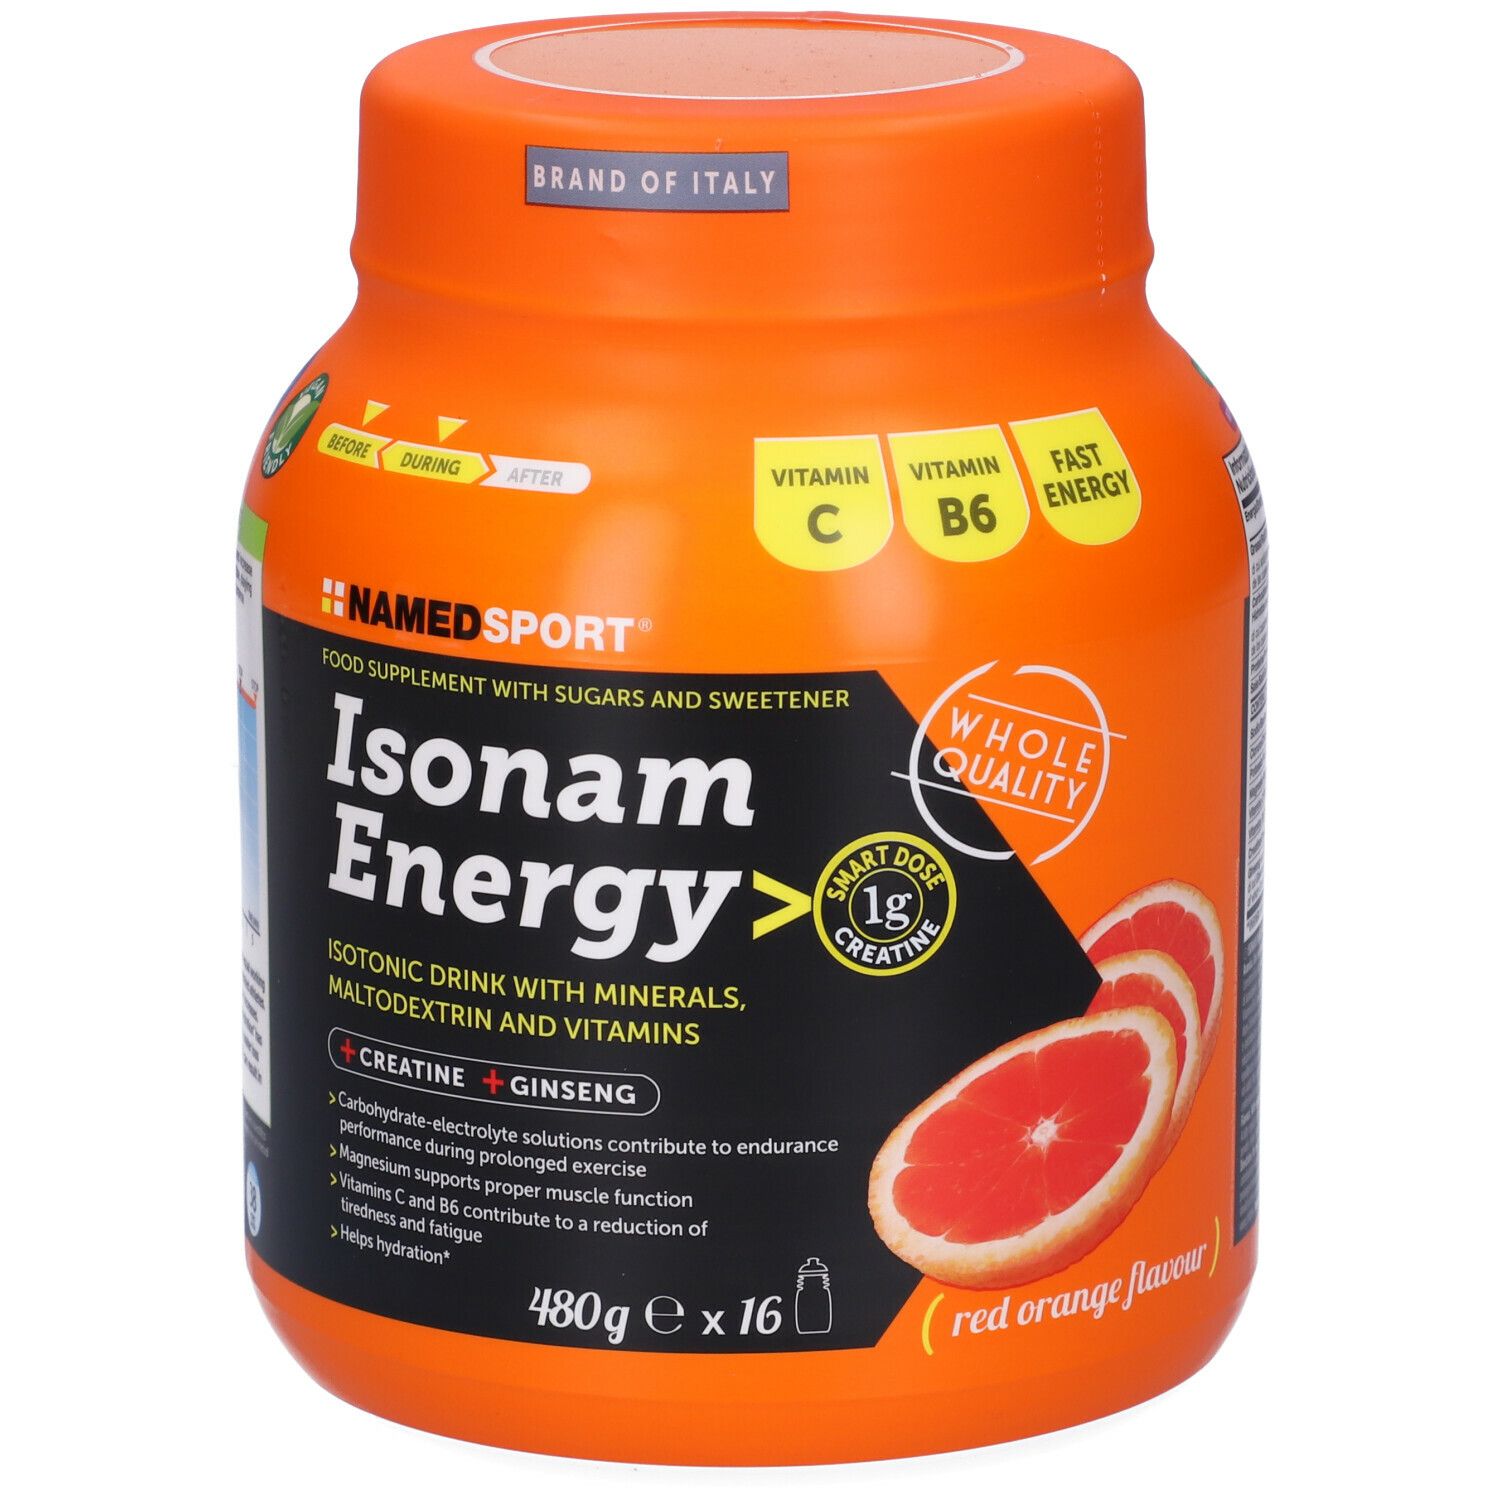 Image of NAMED SPORT® Isonam Energy